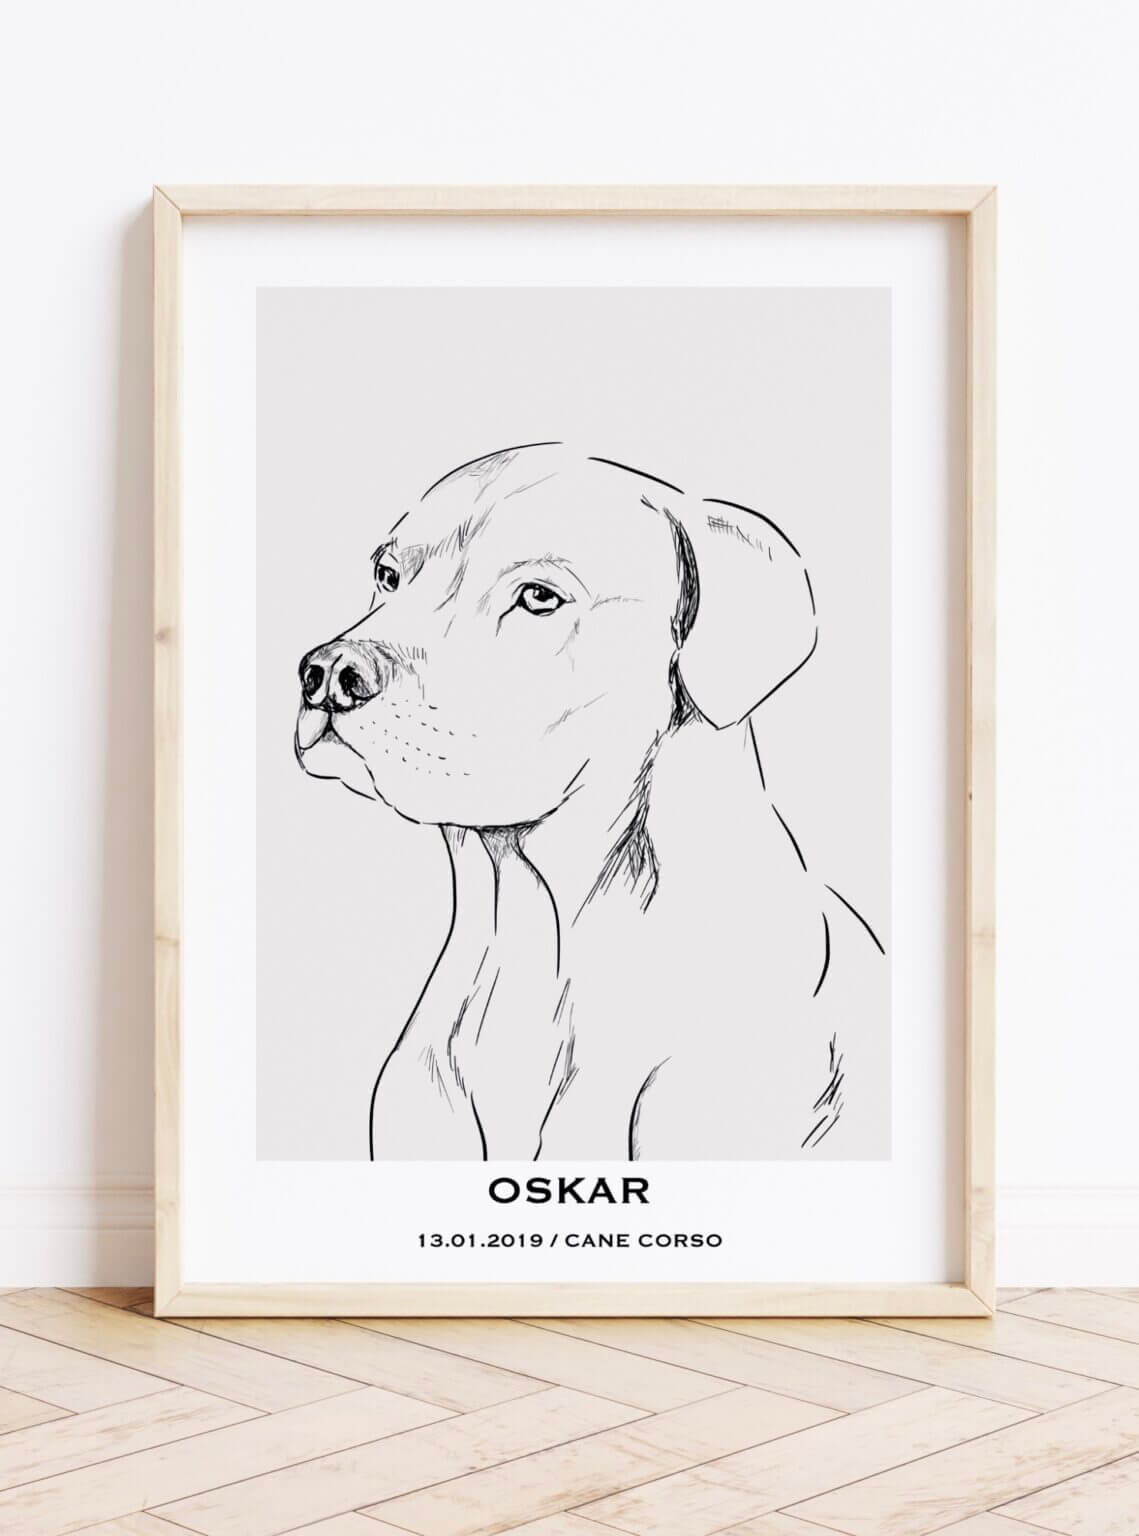 Prezent dla właściciela cane corso – personalizowany plakat z psem (CANE CORSO)